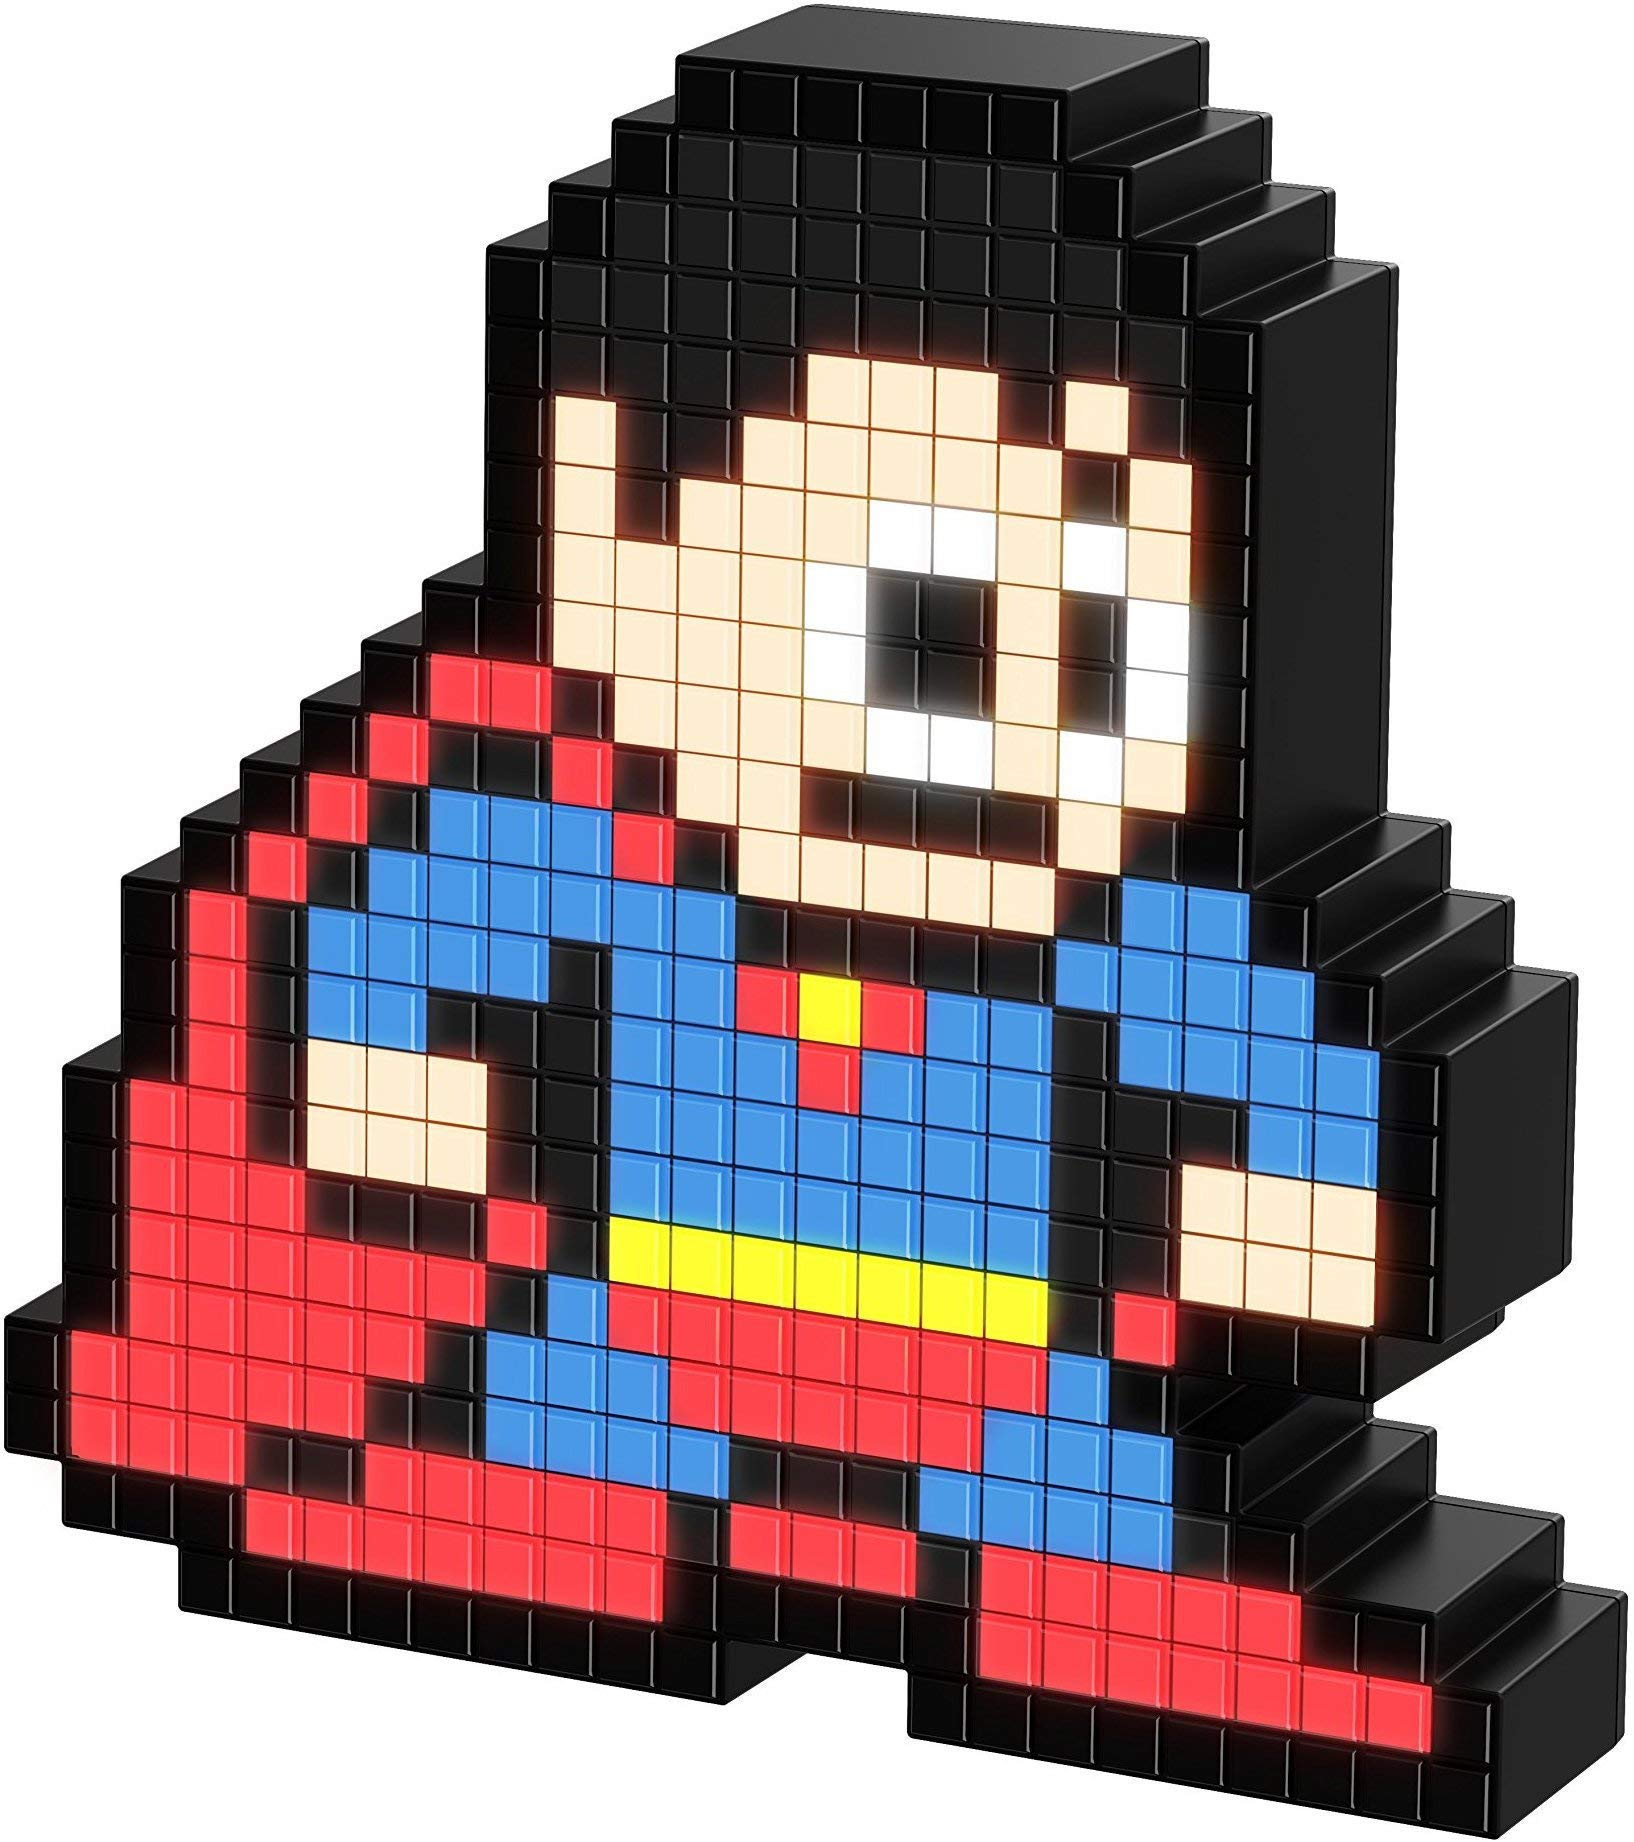 Pixel Pals DC Comics Superman Collectible Lighted Figure